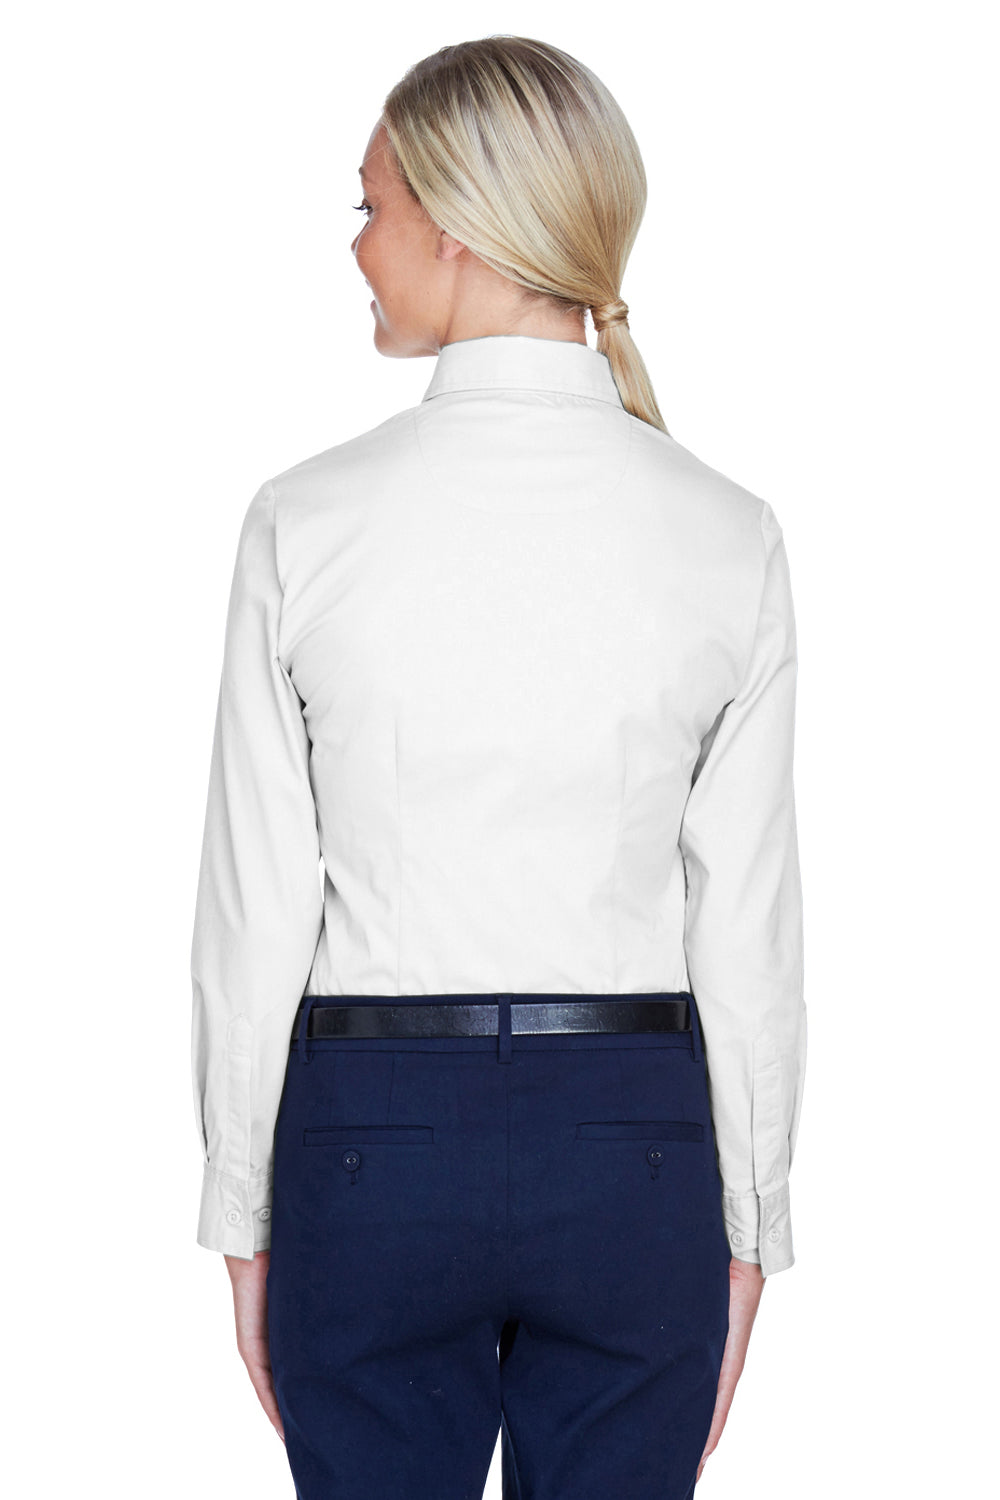 UltraClub 8976 Womens Whisper Long Sleeve Button Down Shirt White Back